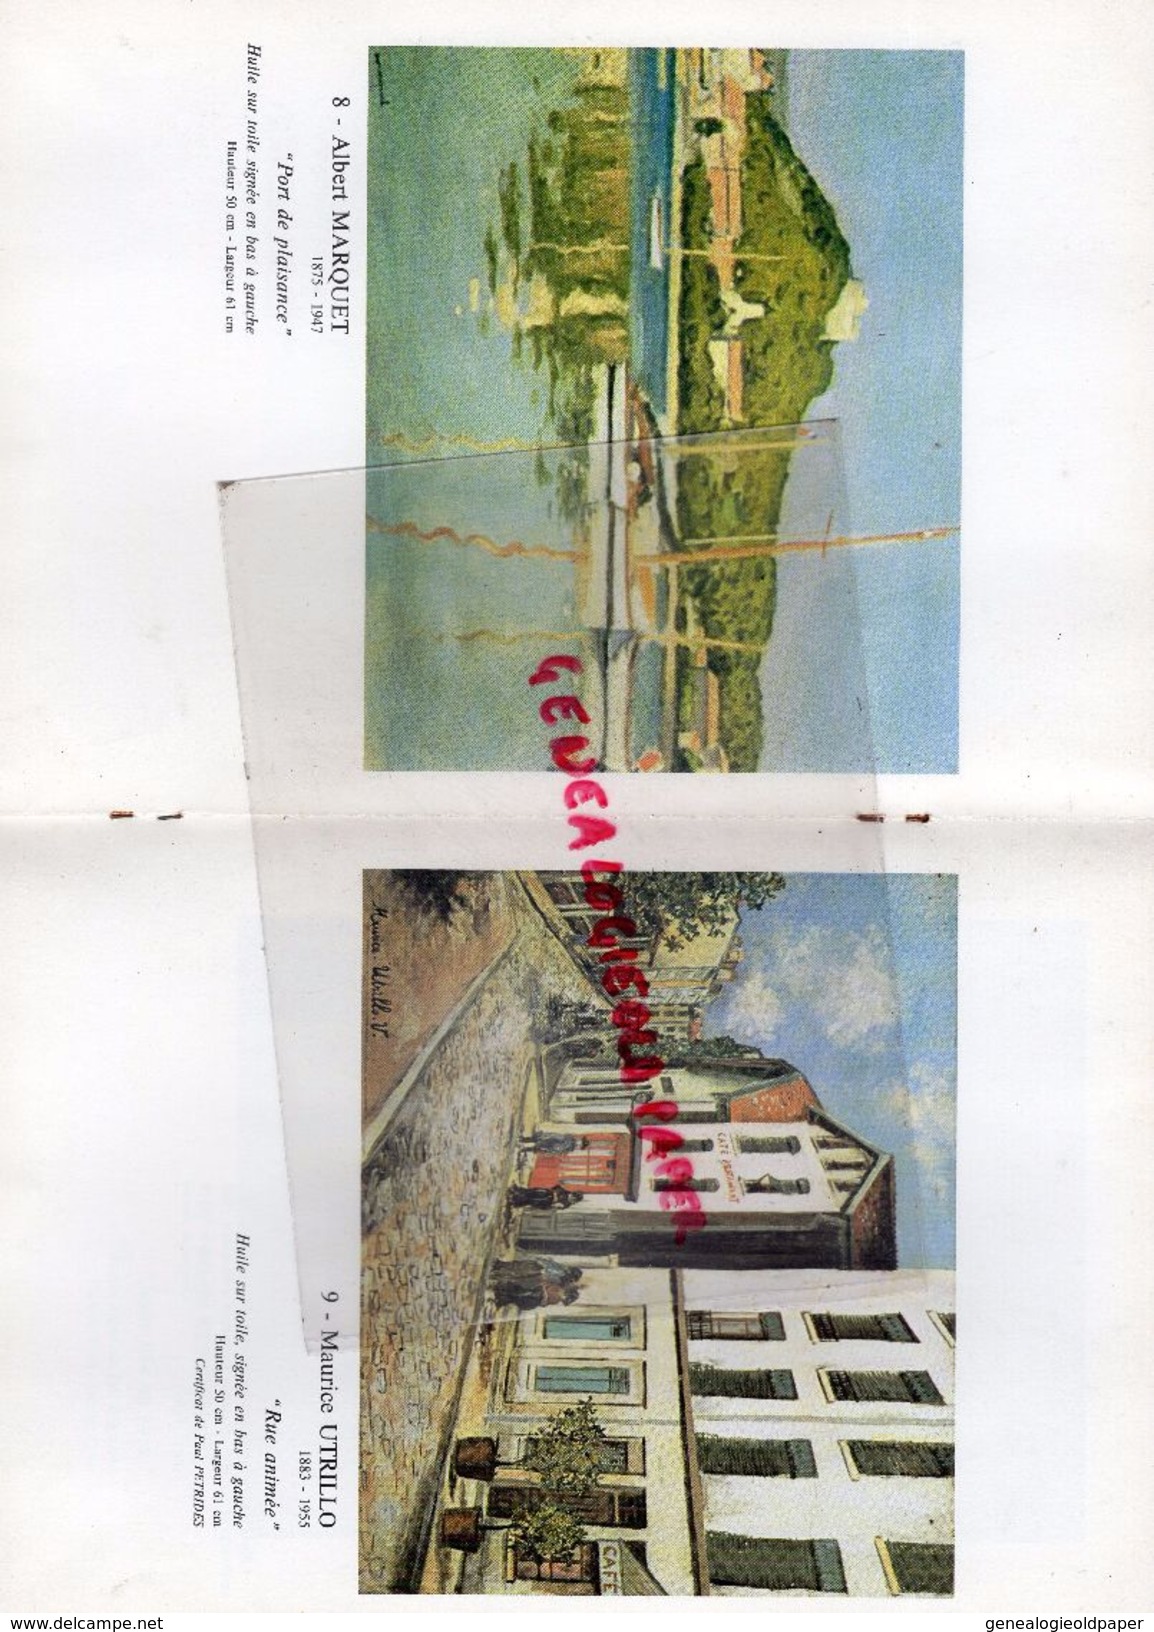 87 - LIMOGES- CATALOGUE BERNARD GALATEAU 21 MARS 1980- RUE CRUCHE D'OR- G.DE BLETTERIE-LHOTE-DETROY-GUILLAUMIN-DUFY-